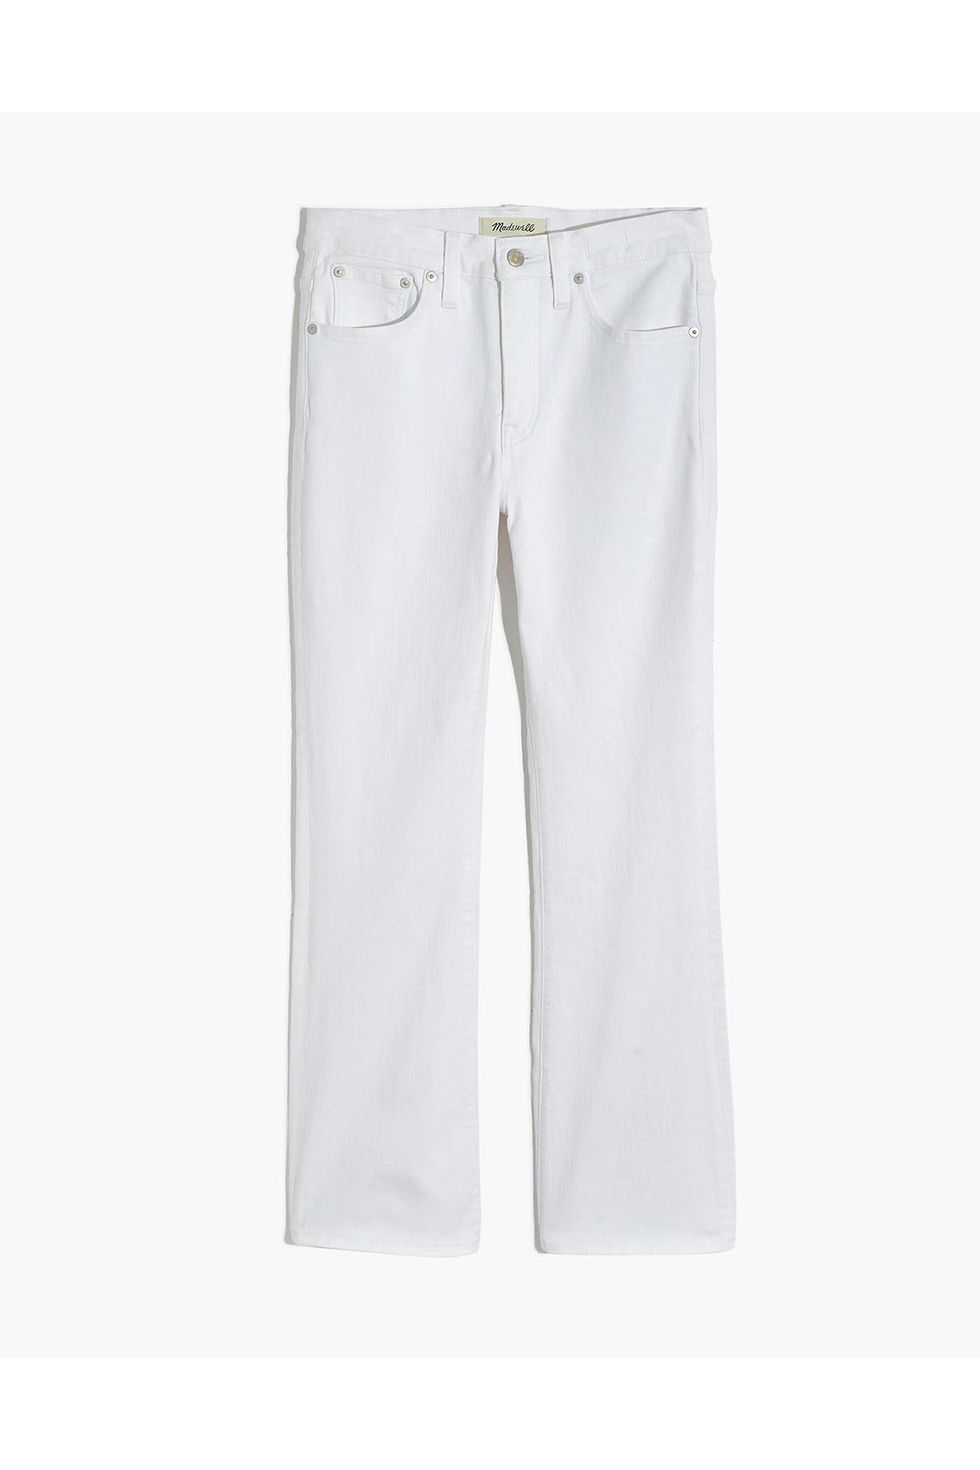 Roca sangre Por separado 20 Best White Jeans to Wear Spring 2023 - Stylish White Denim for Women